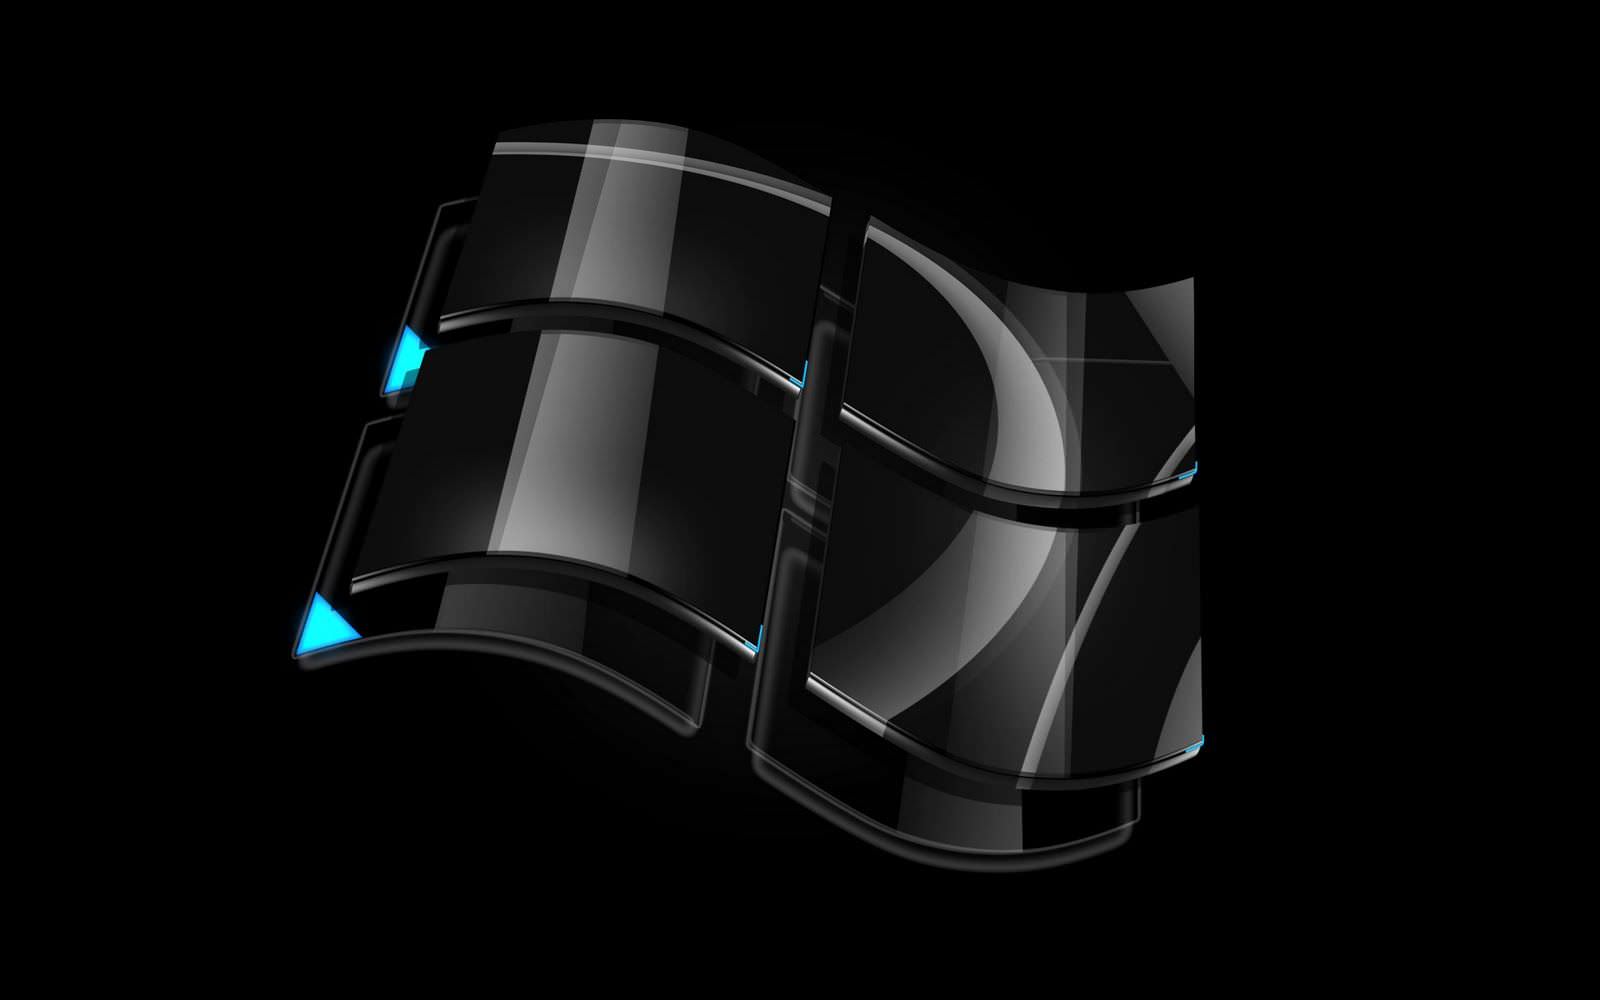 3D Windows 8 Wallpaper, Image, Background, Picture. Design